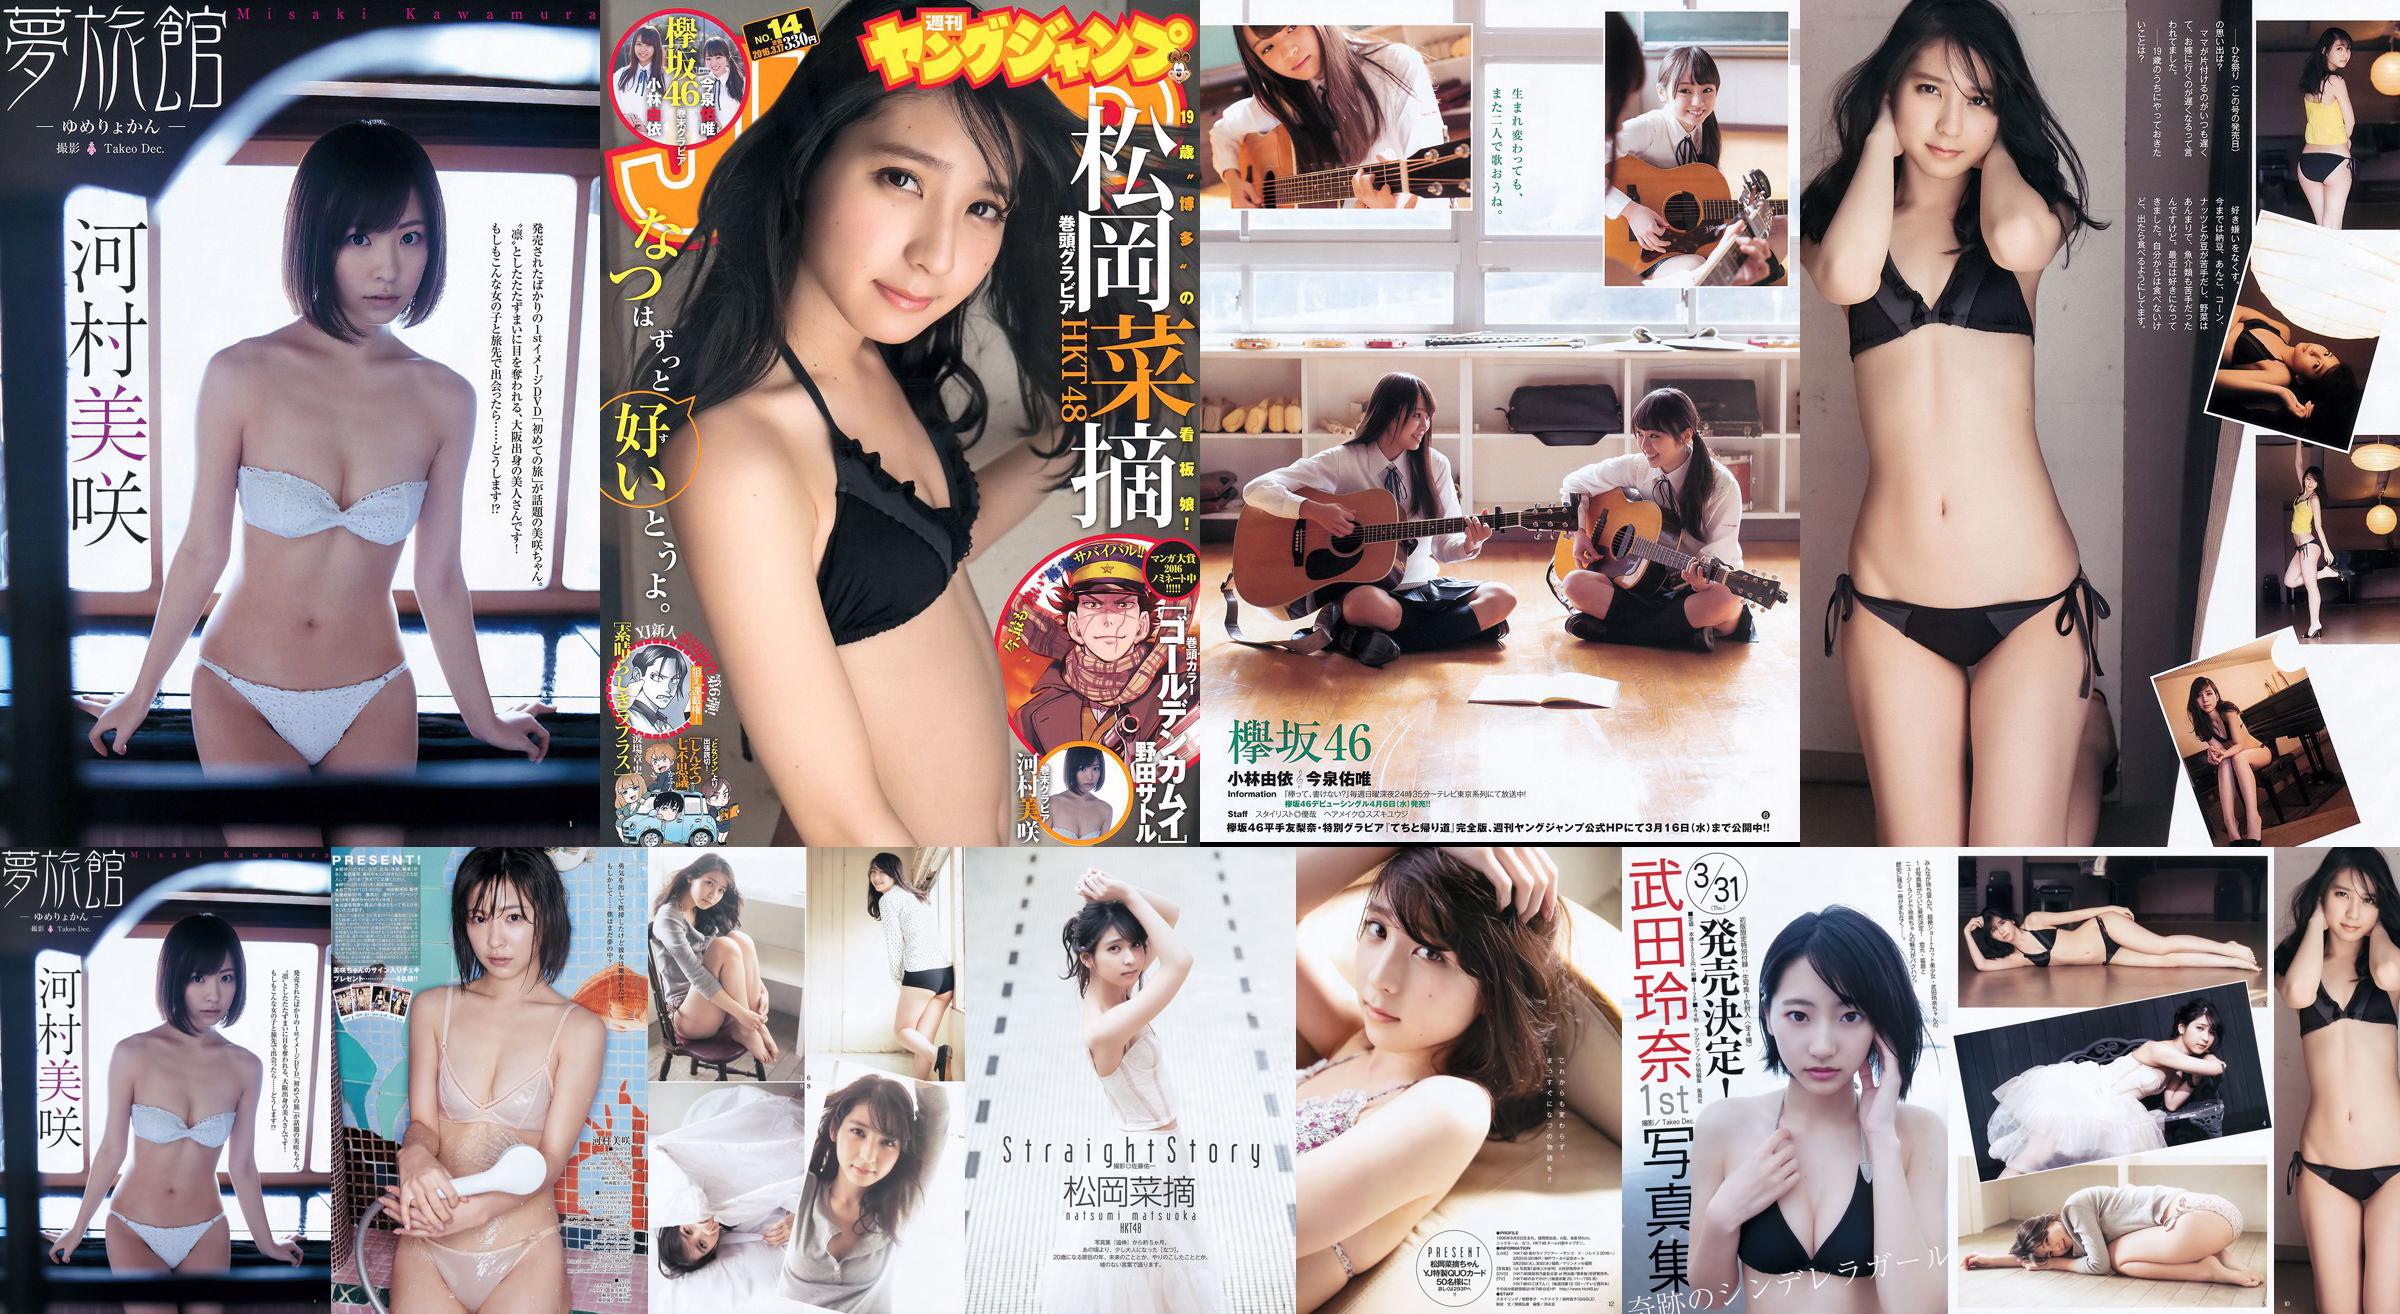 Muraoka ผักคัดสรร Yui Kobayashi Yui Imaizumi Misaki Kawamura [Weekly Young Jump] 2016 No.14 Photo Magazine No.4604a3 หน้า 1